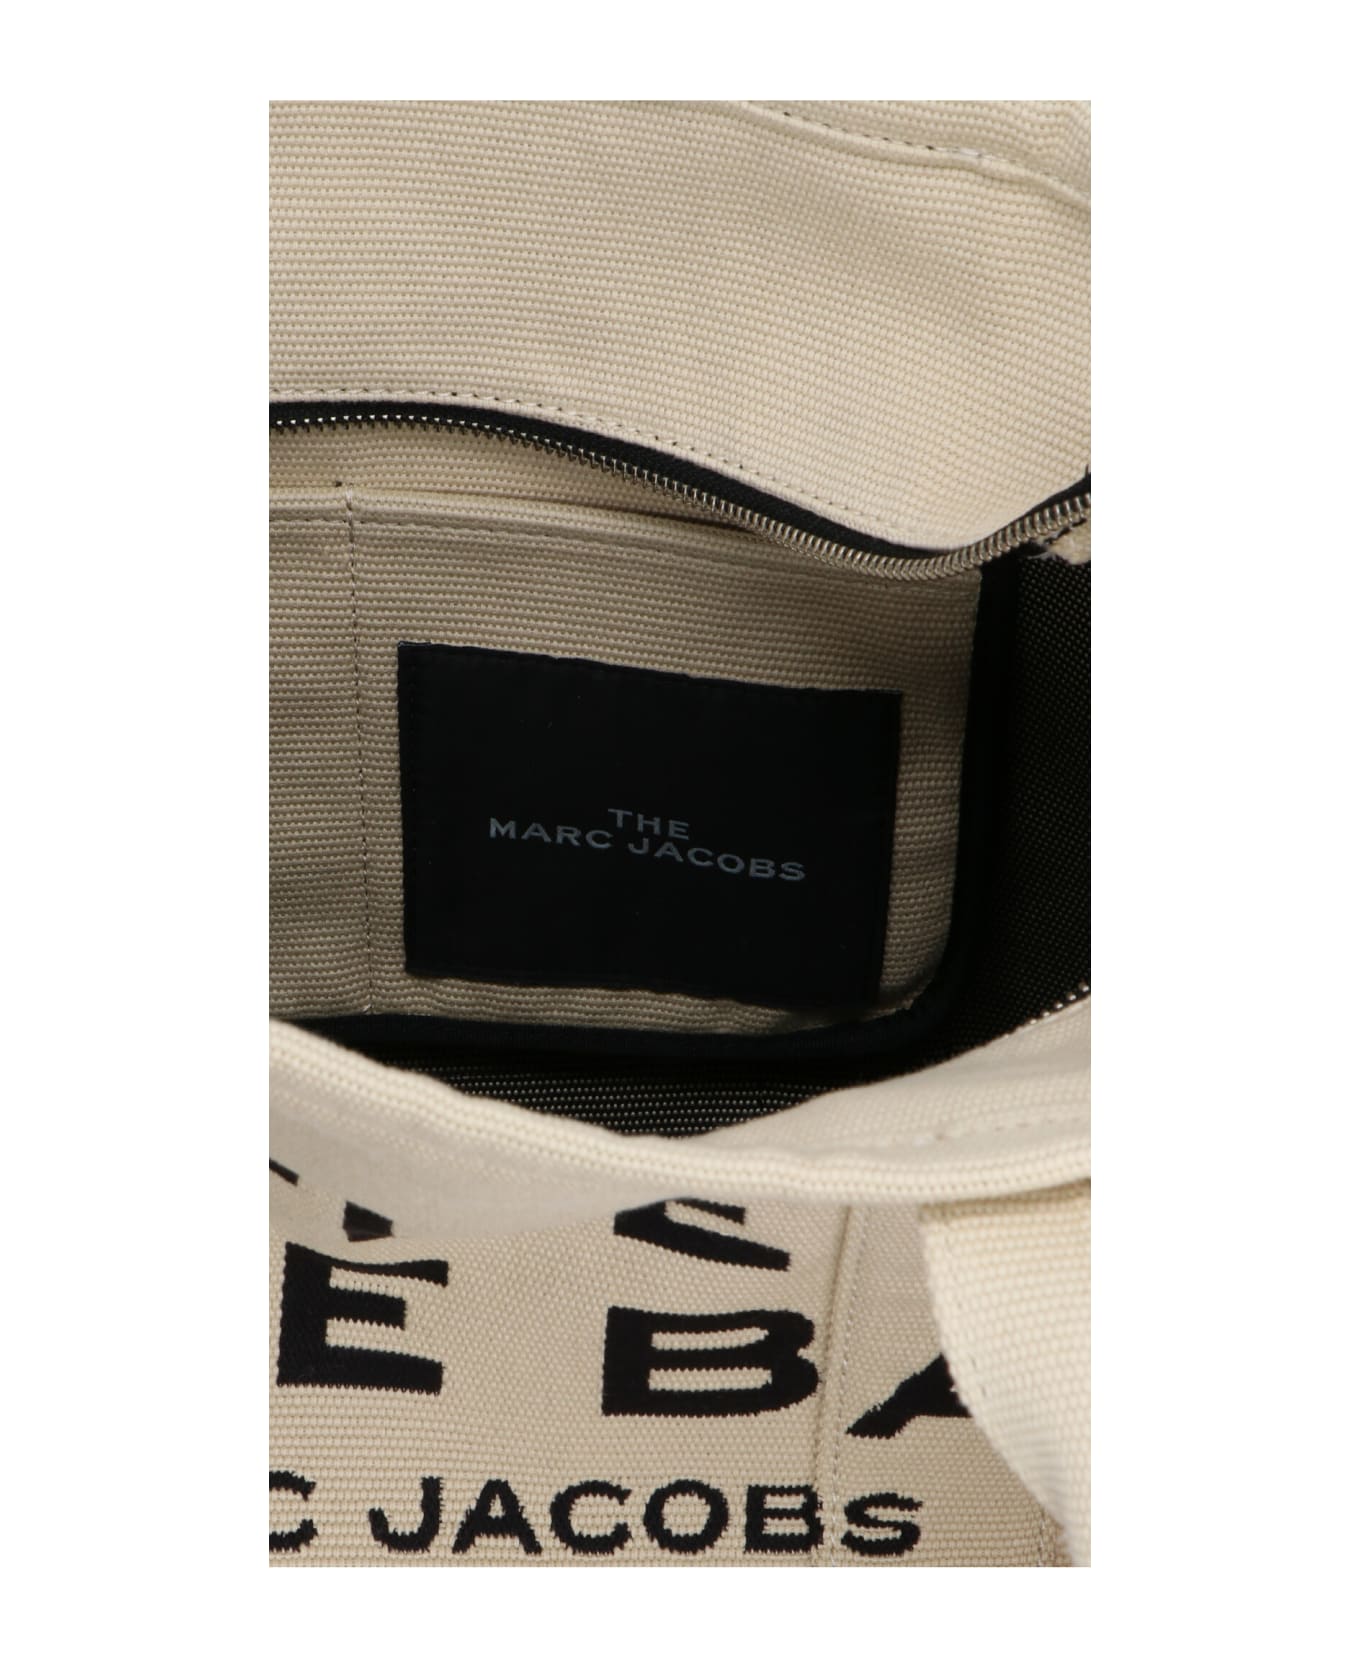 Marc Jacobs 'traveler Tote' Shopping Bag - Beige